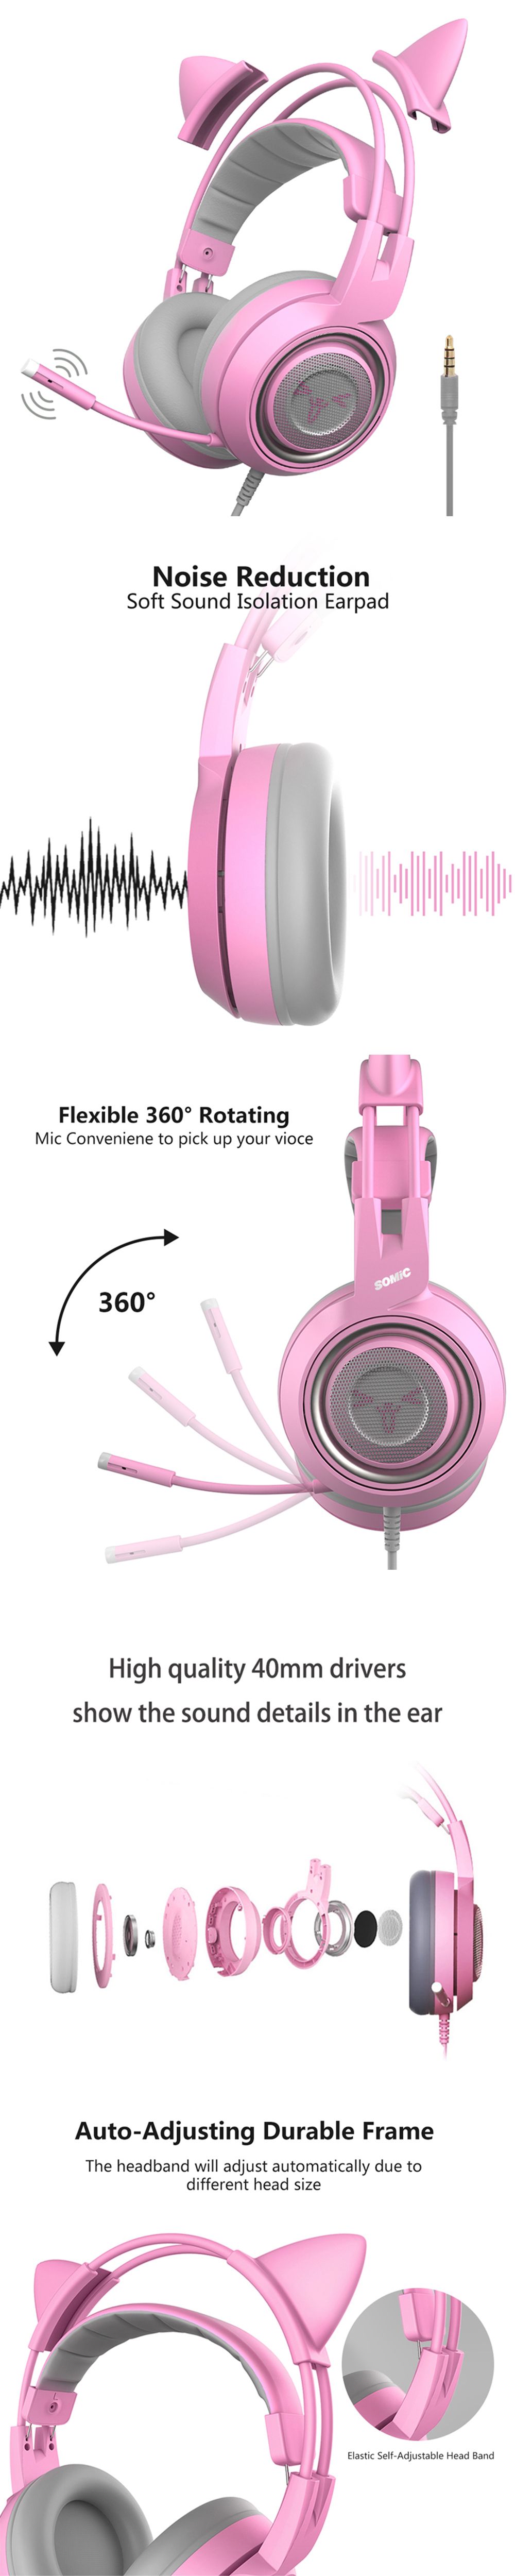 SOMiC-G951S-35mm--USB-DJ-Deep-Bass-Gaming-Headphone-Cat-Earphones-Headset-With-Microphone-for-Comput-1560837